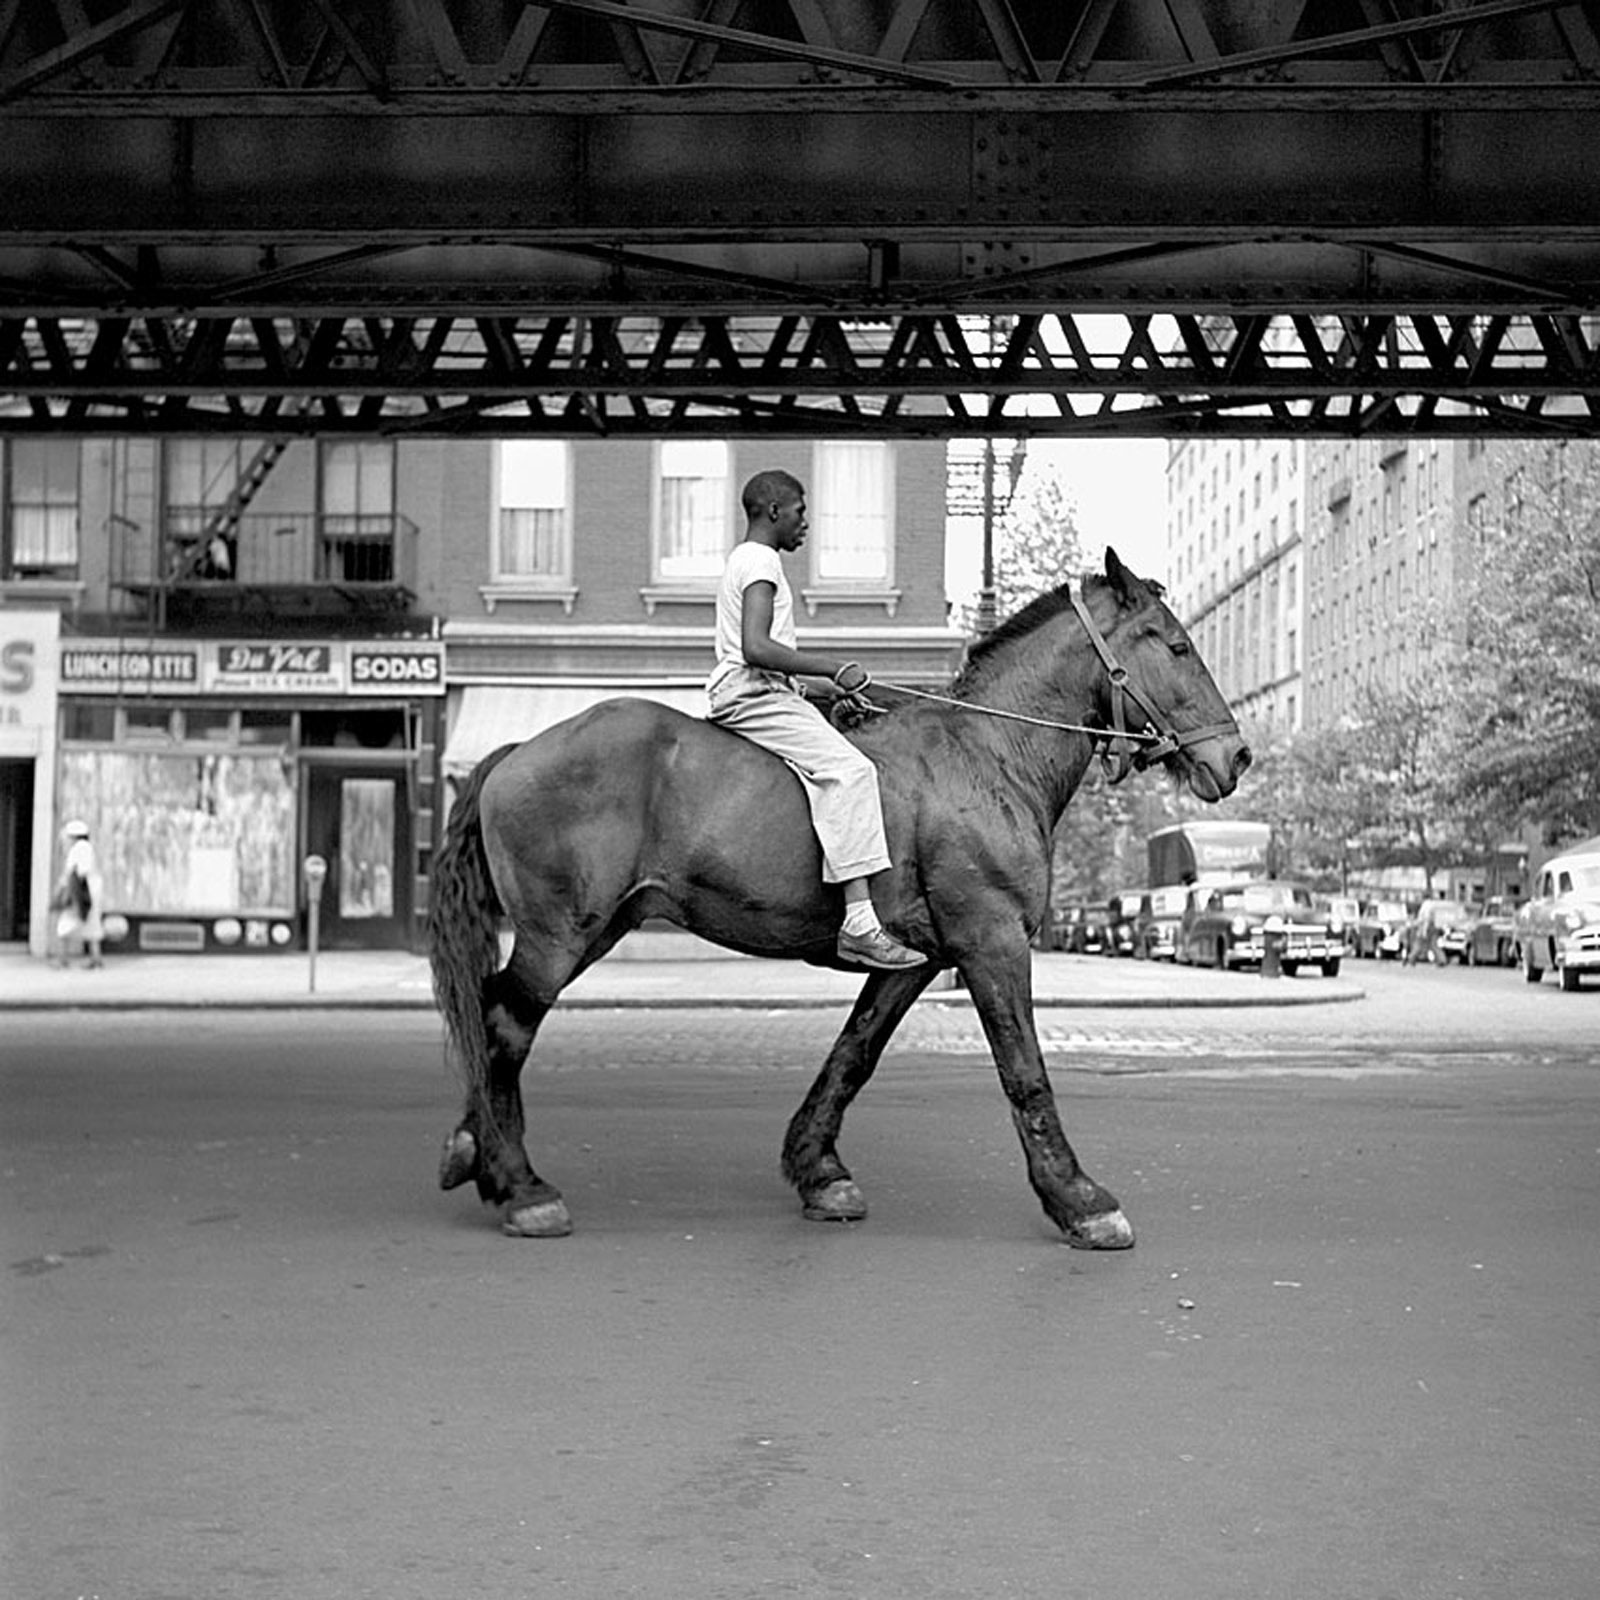 New York, NY, August 11, 1954